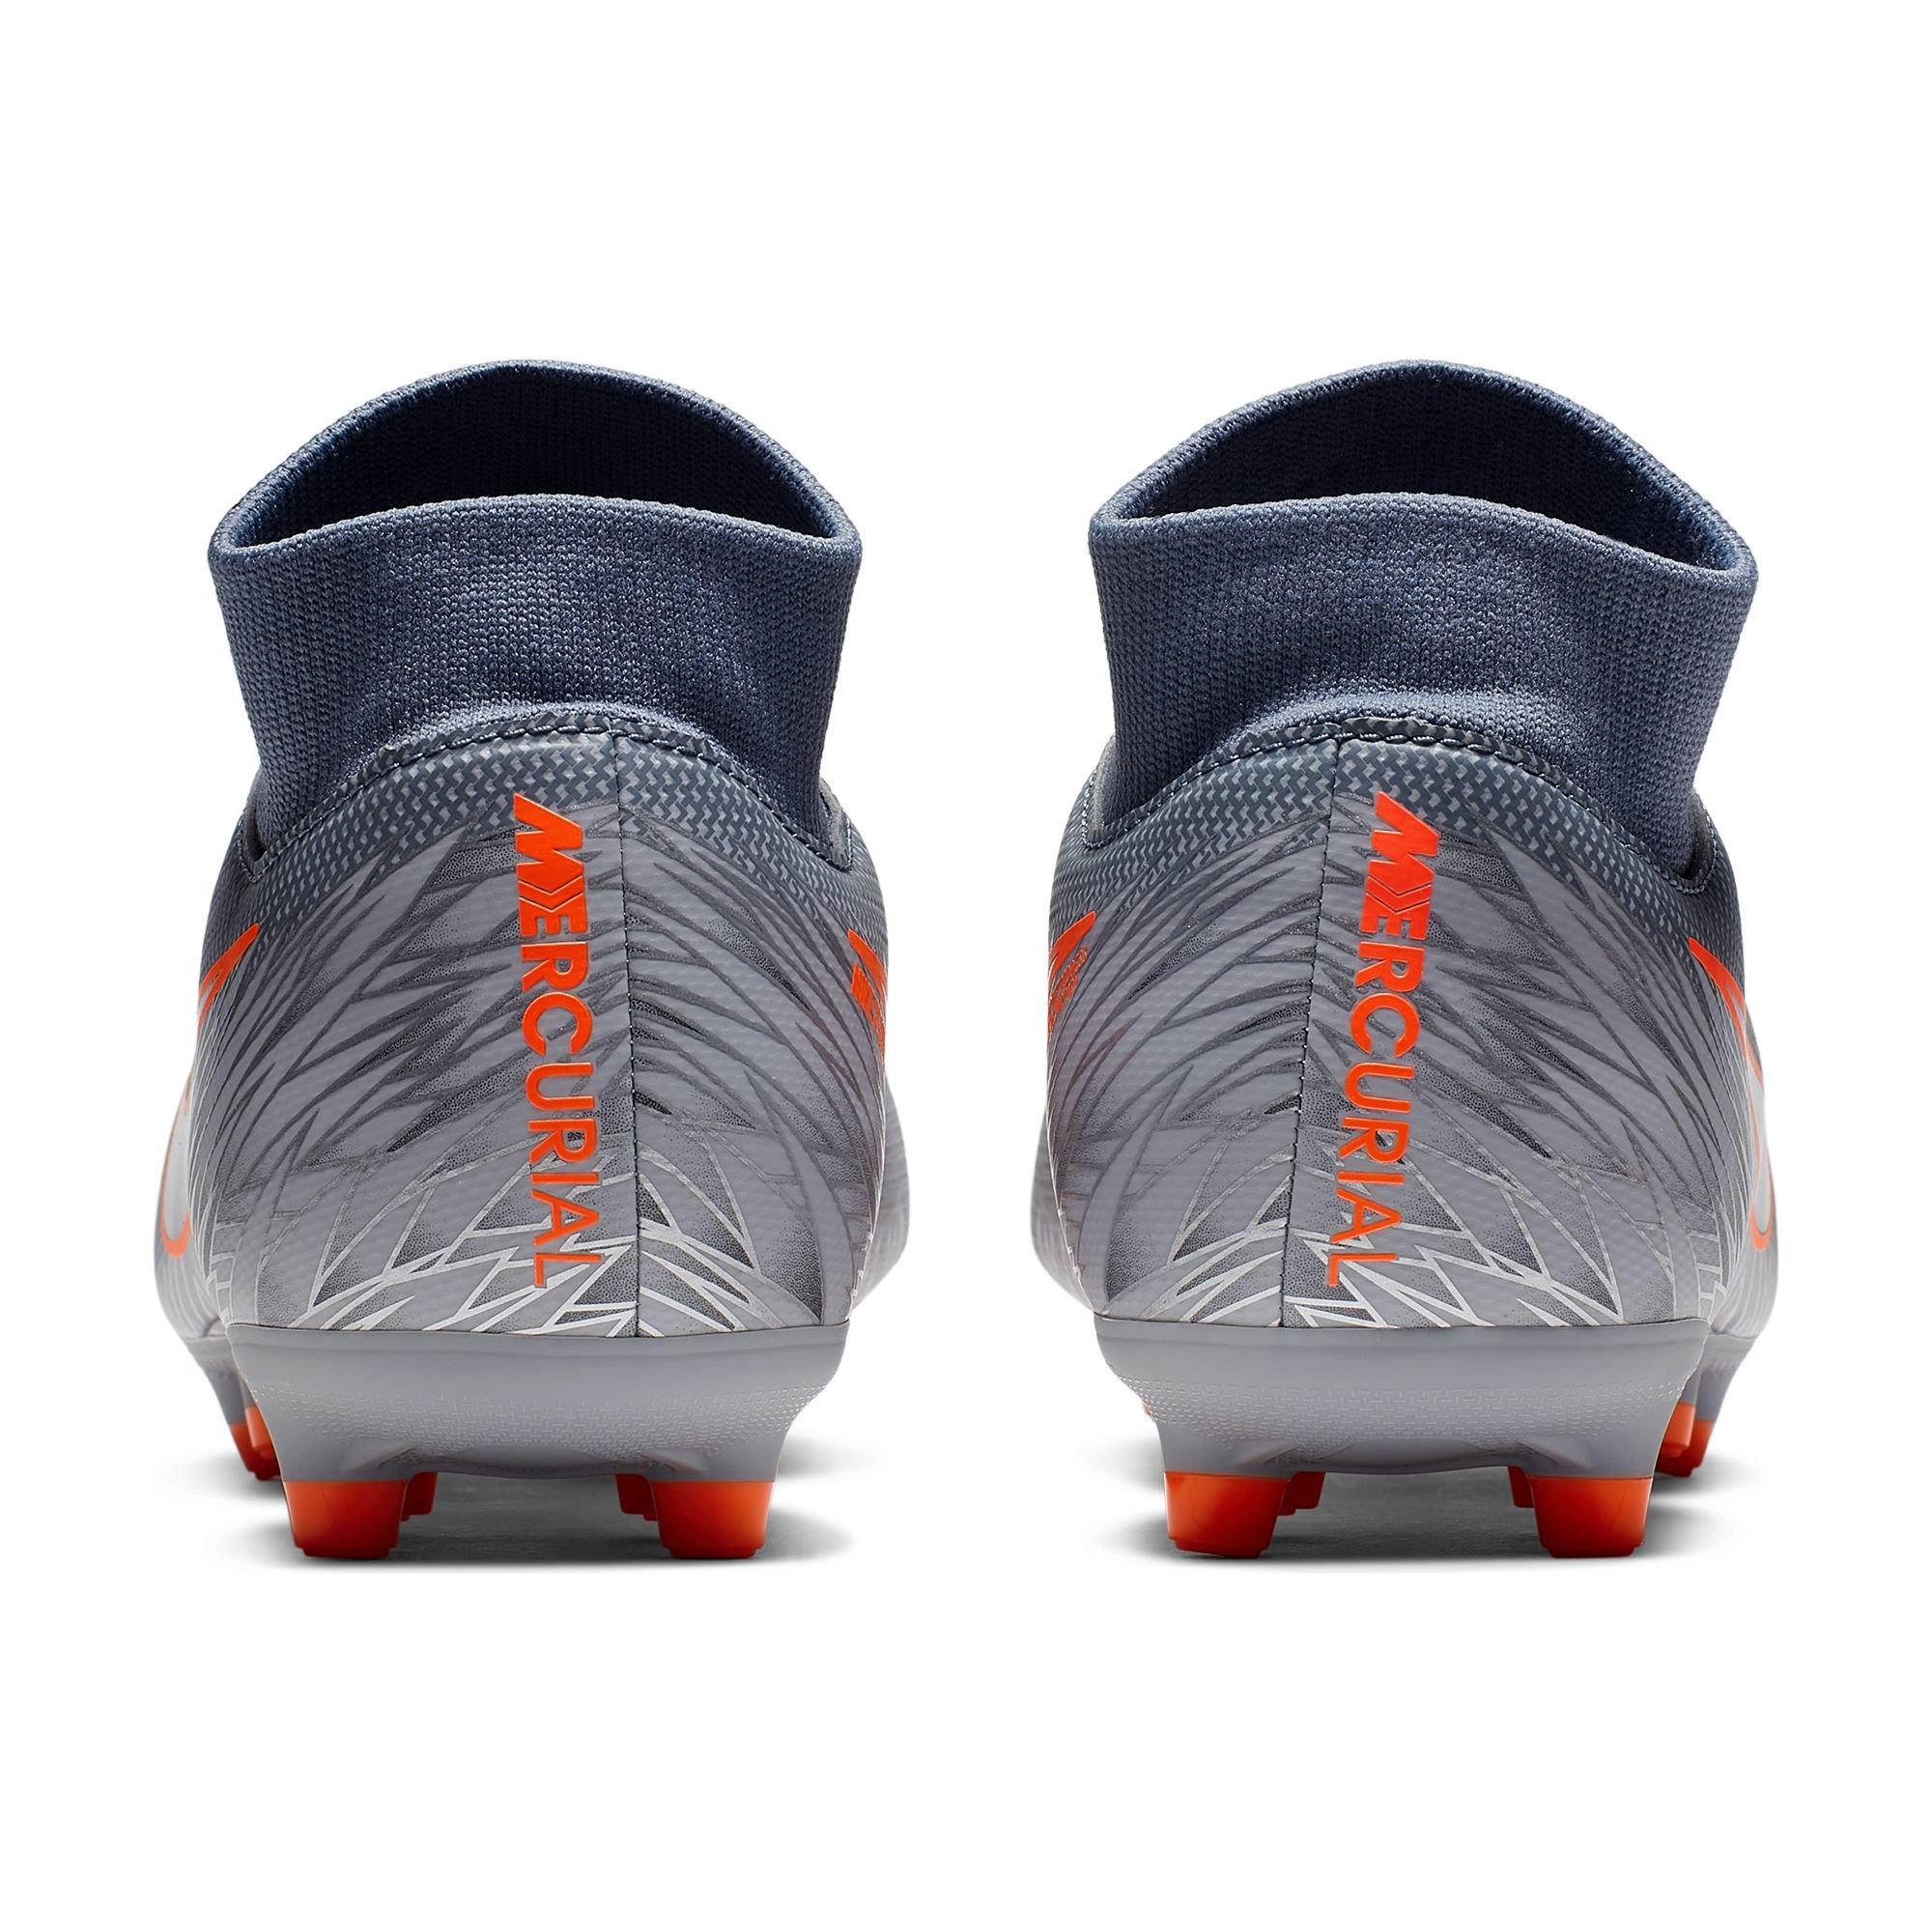 nike orange and grey football boots